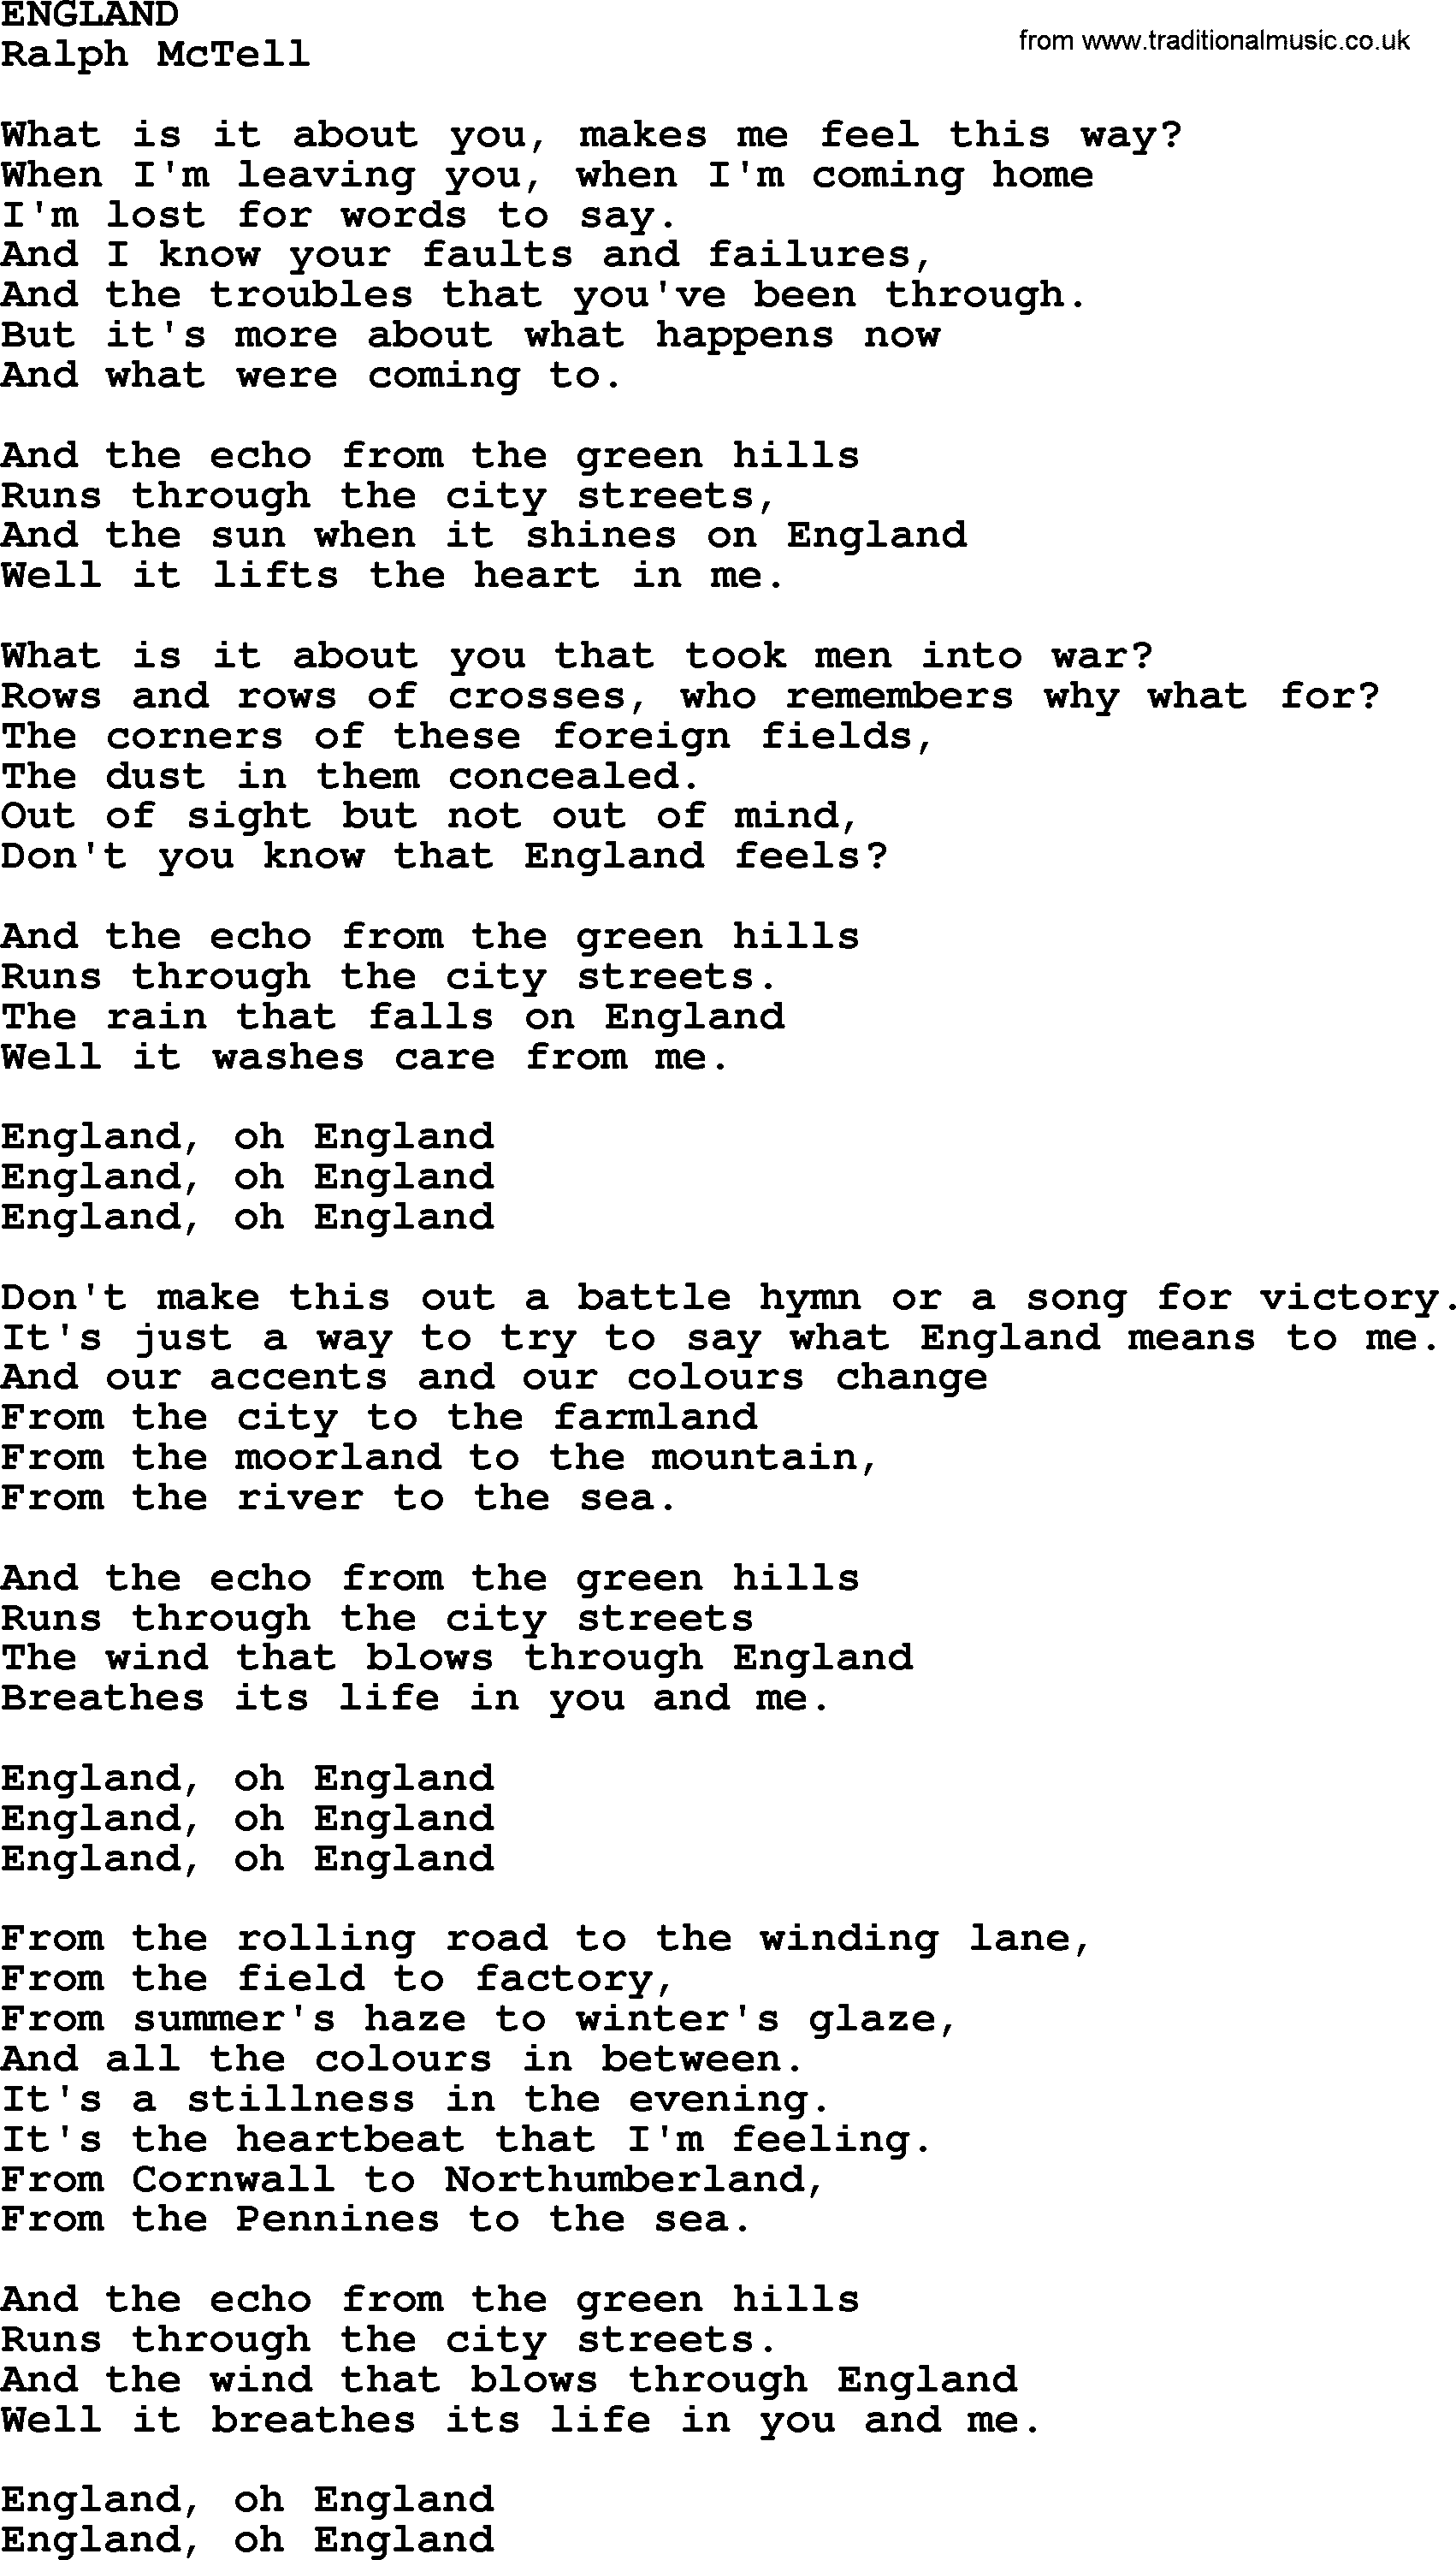 Ralph McTell Song: England, lyrics